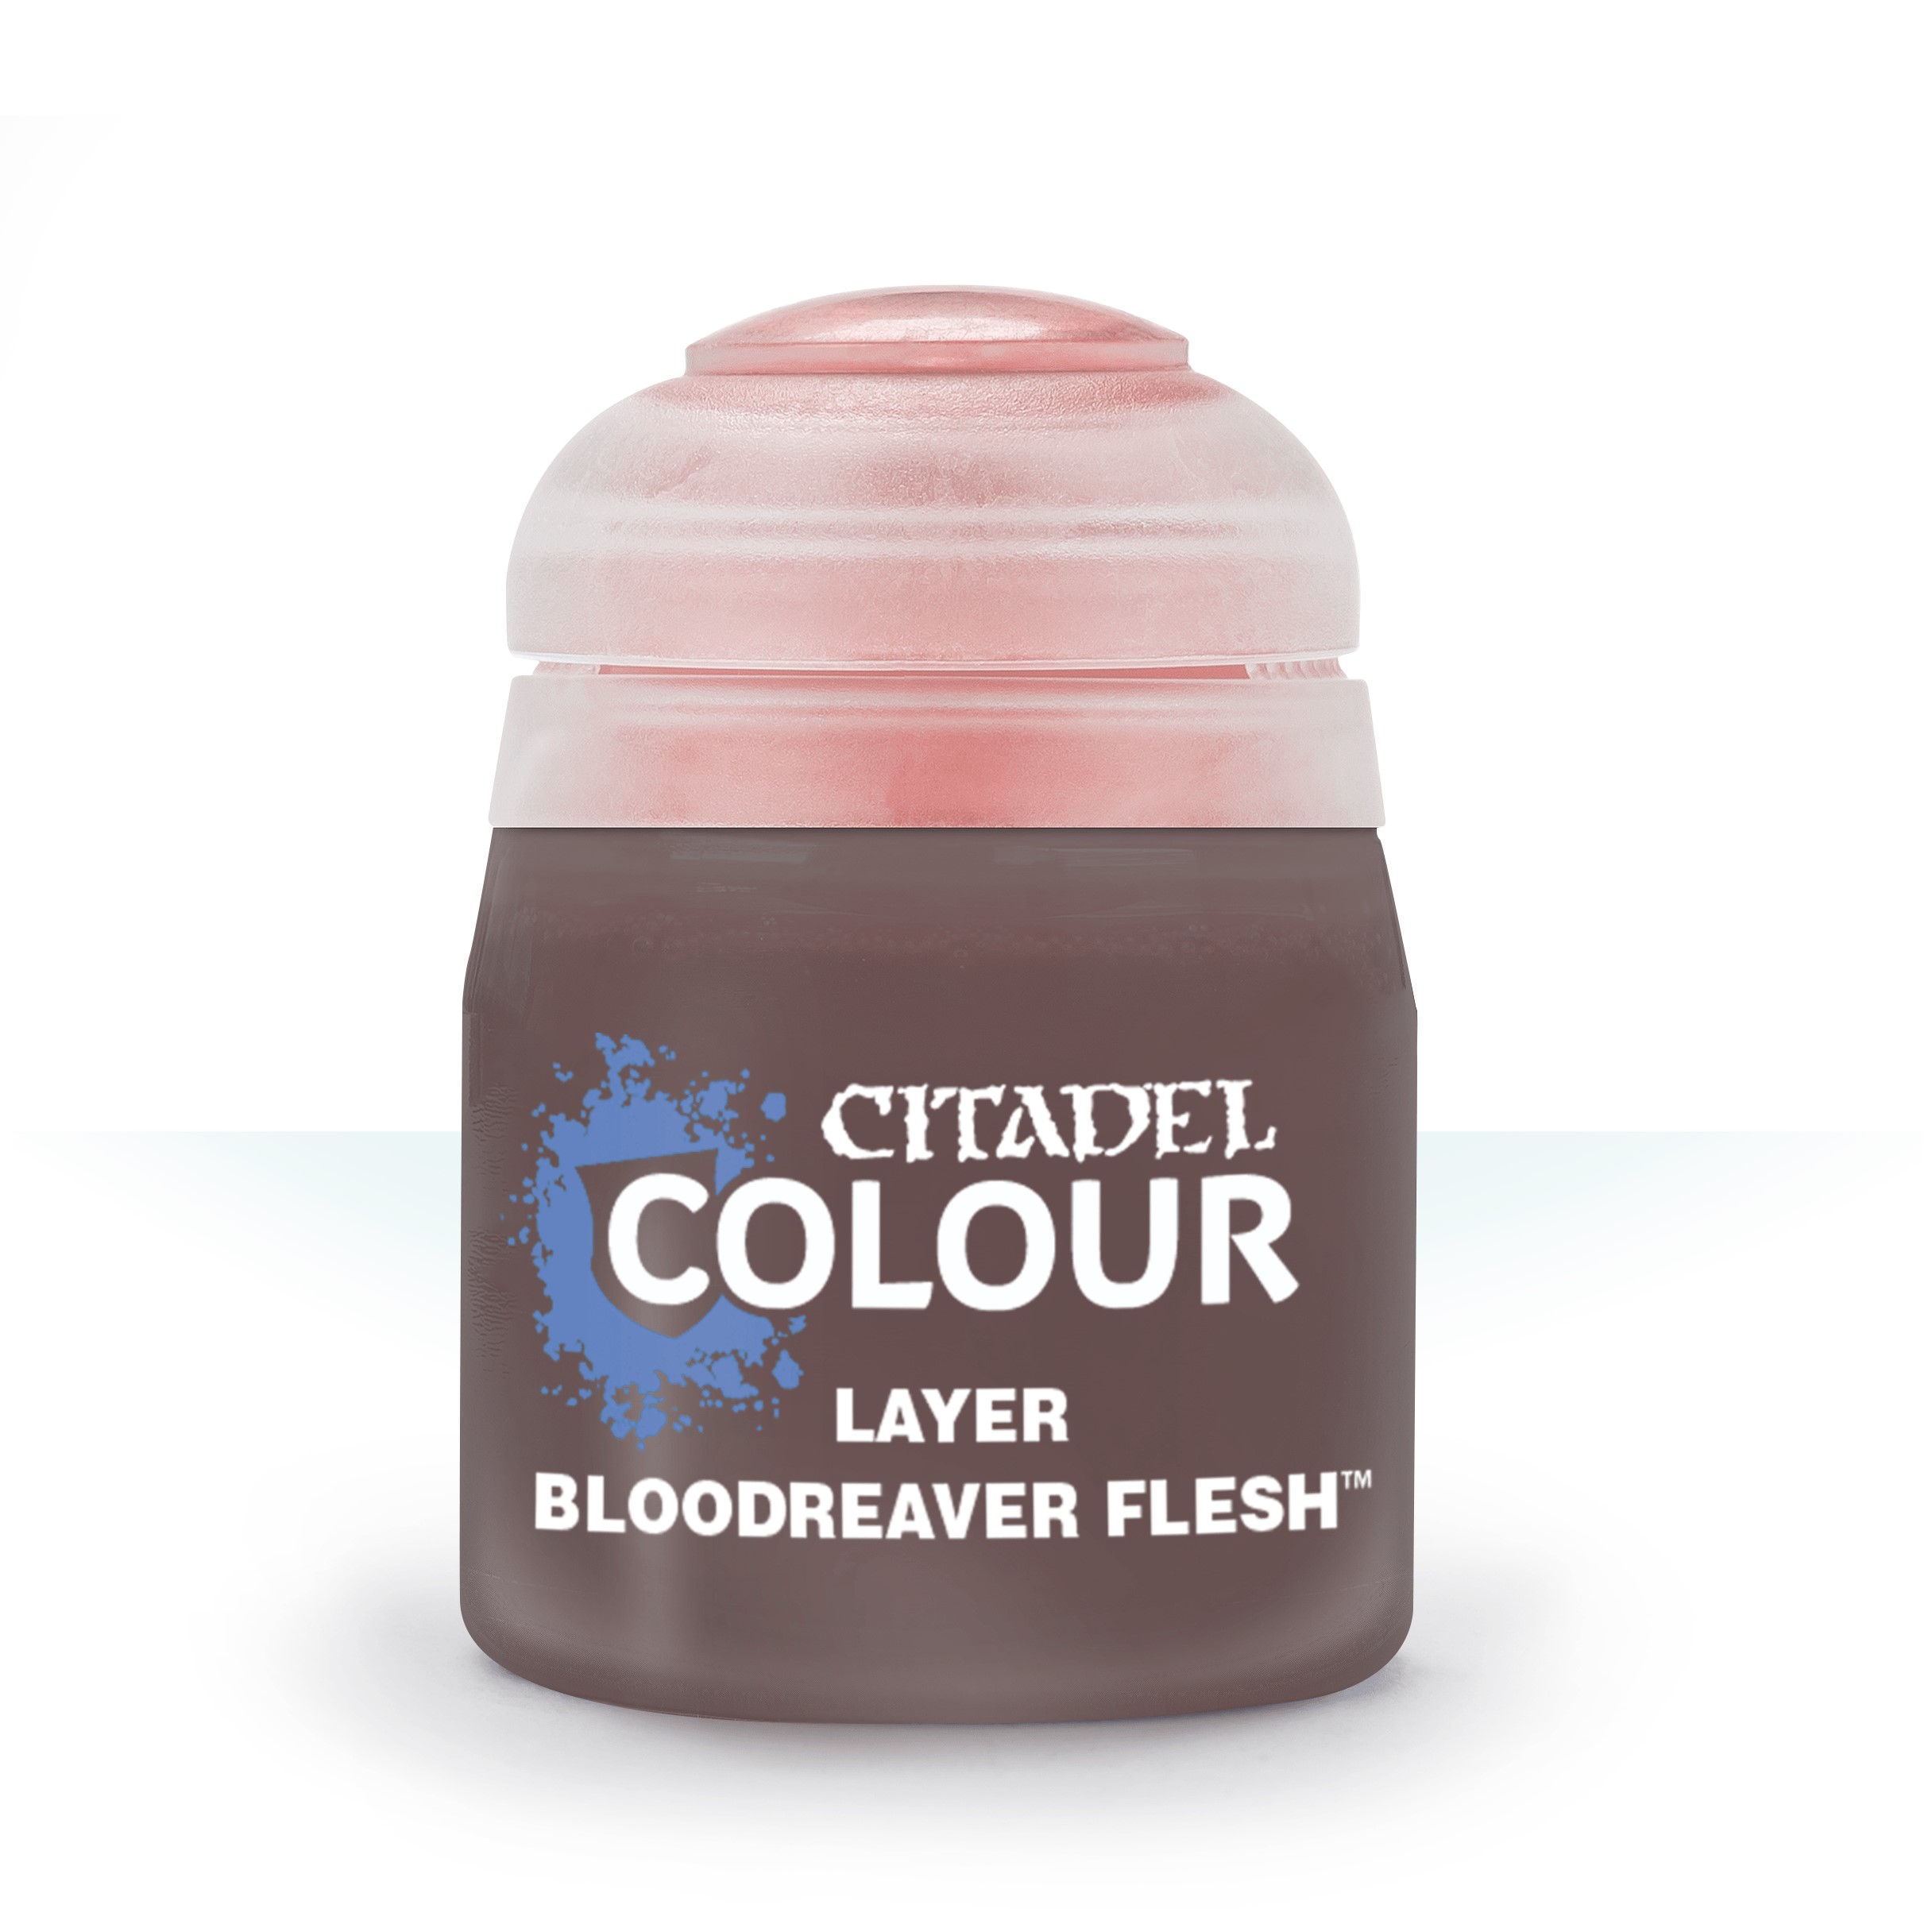 Layer Bloodreaver Flesh - Citadel Colour